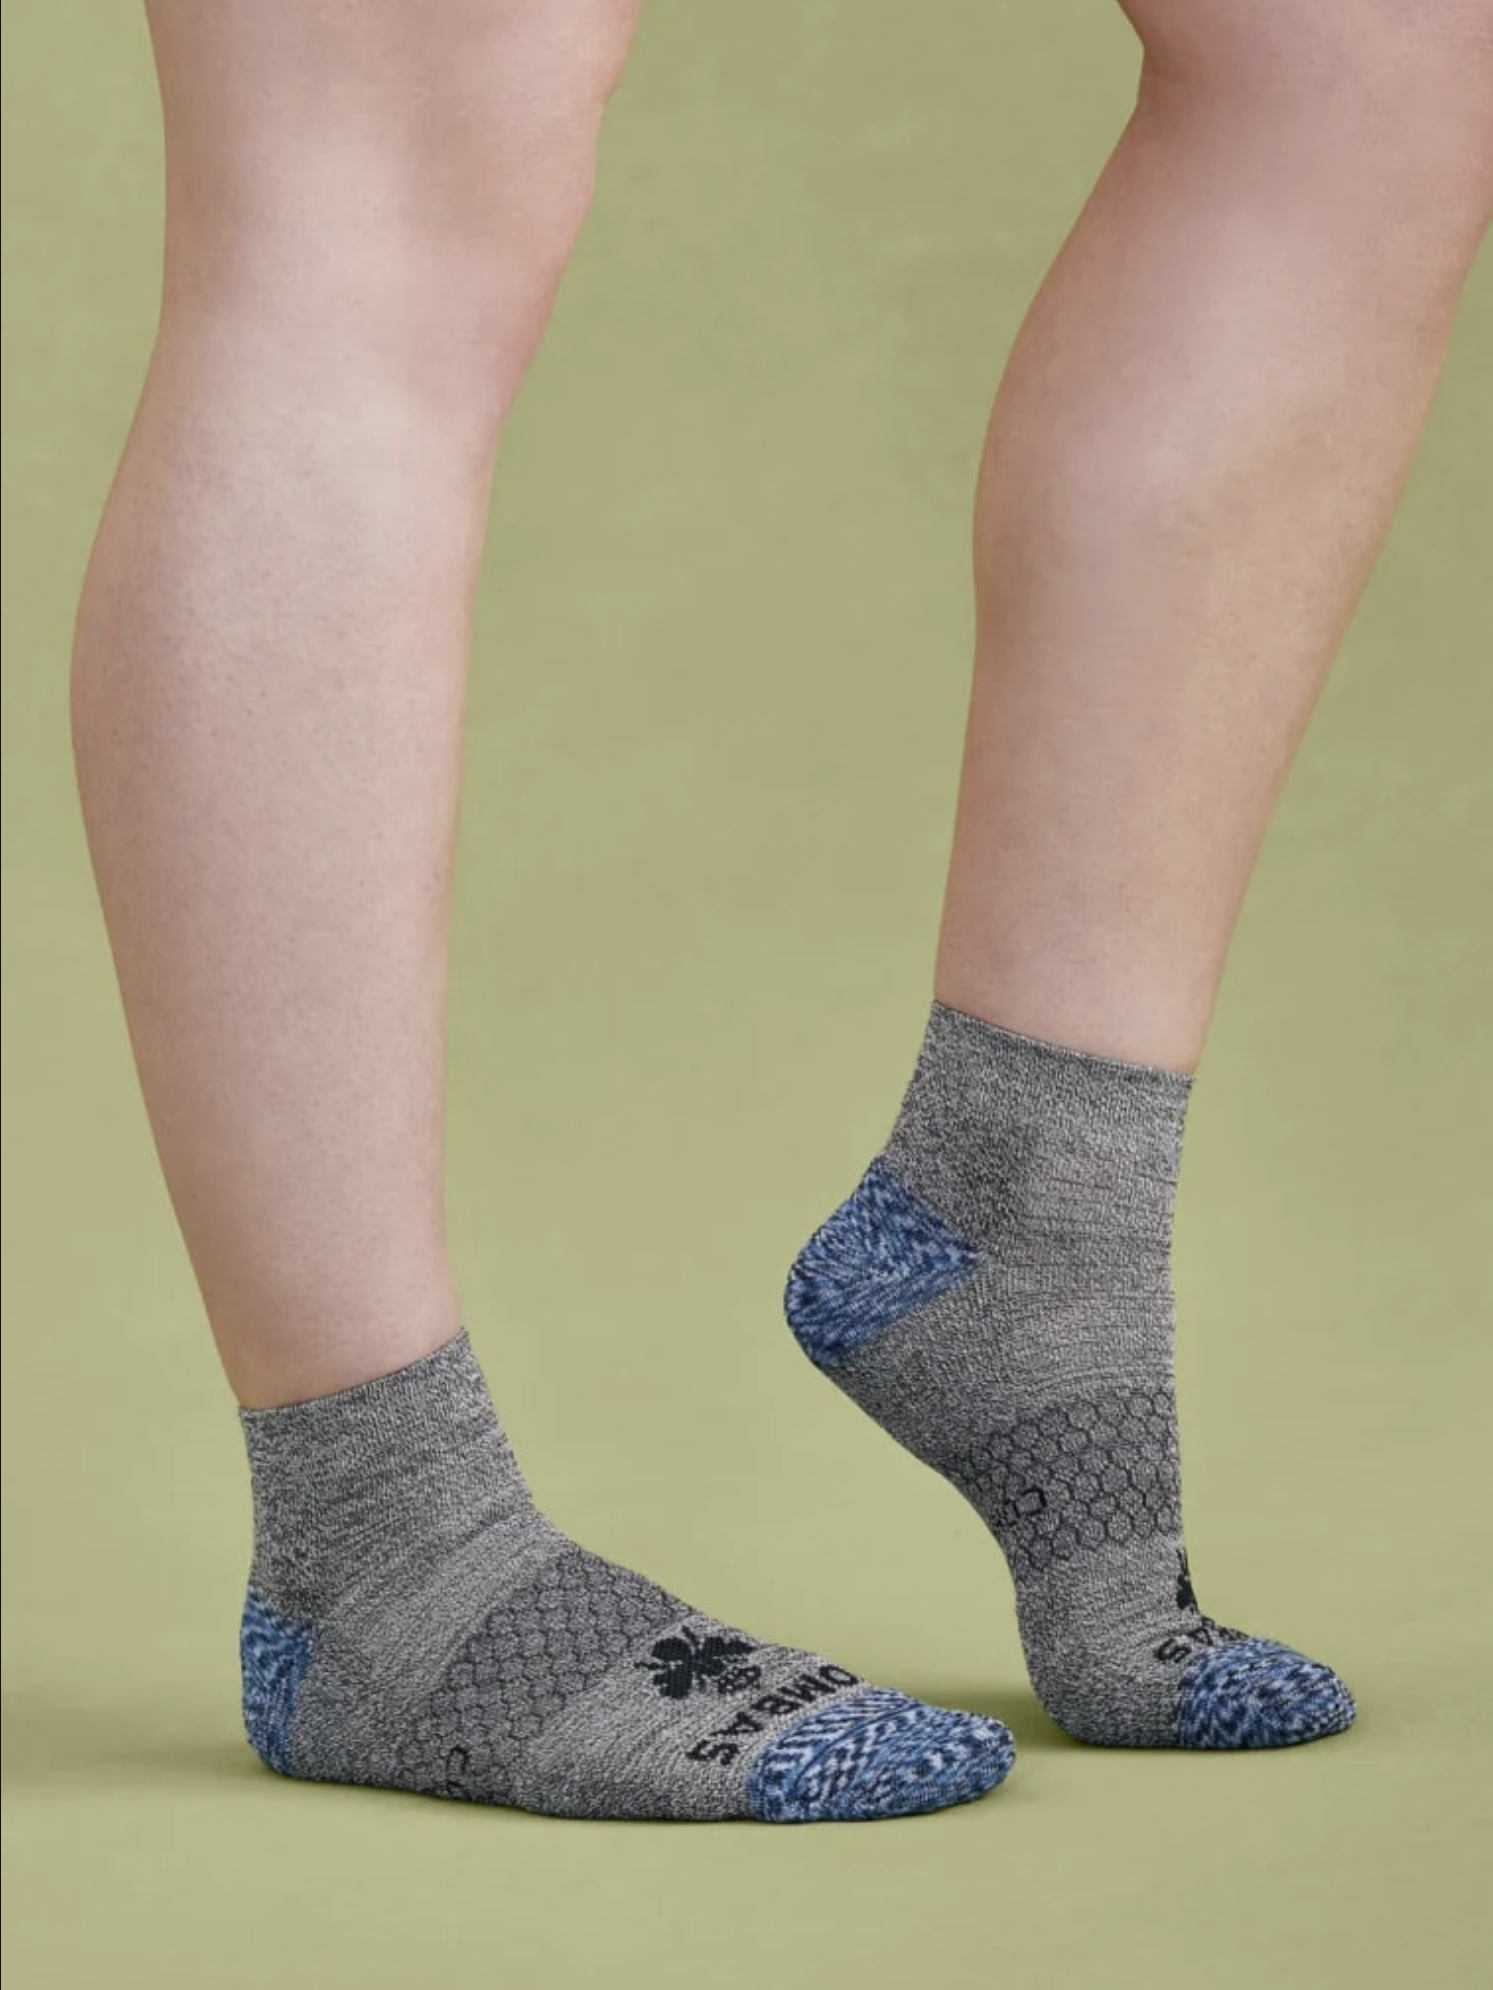 7 Best Compression Socks For Women